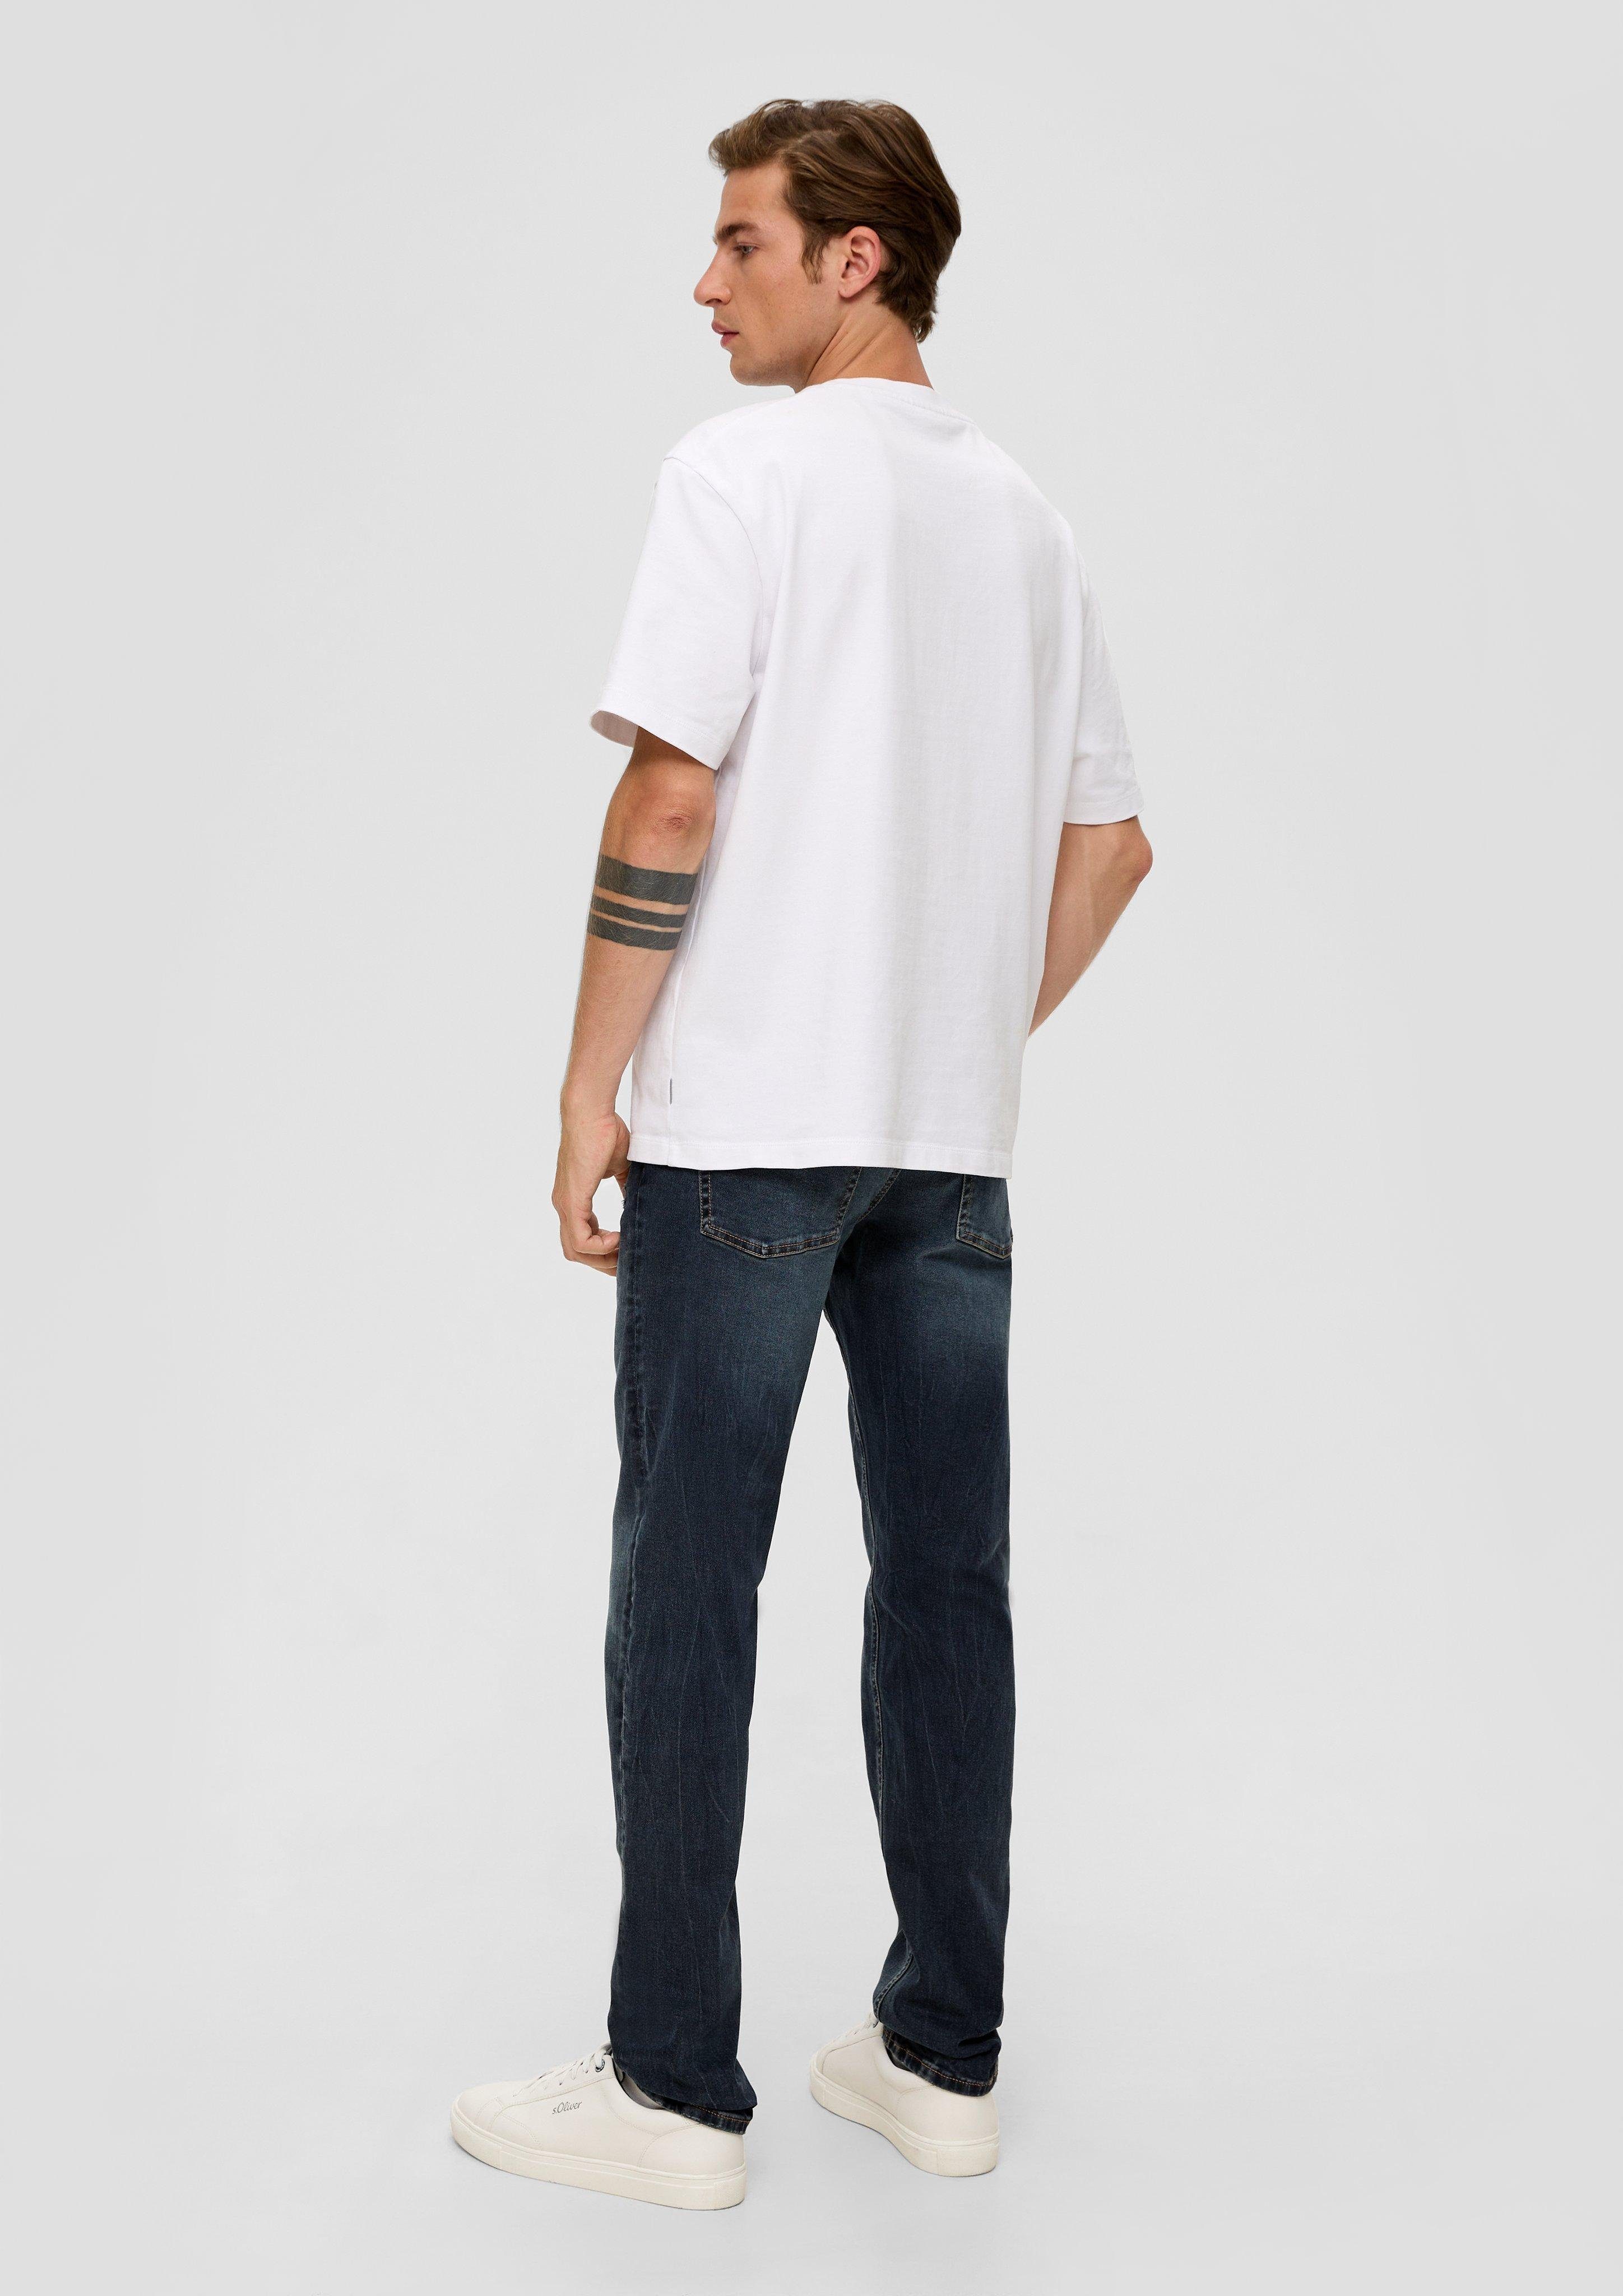 Slim Fit Rise dunkelblau Jeans / Slim / Leg s.Oliver / Label-Patch, Mid Stoffhose Destroyes Nelio